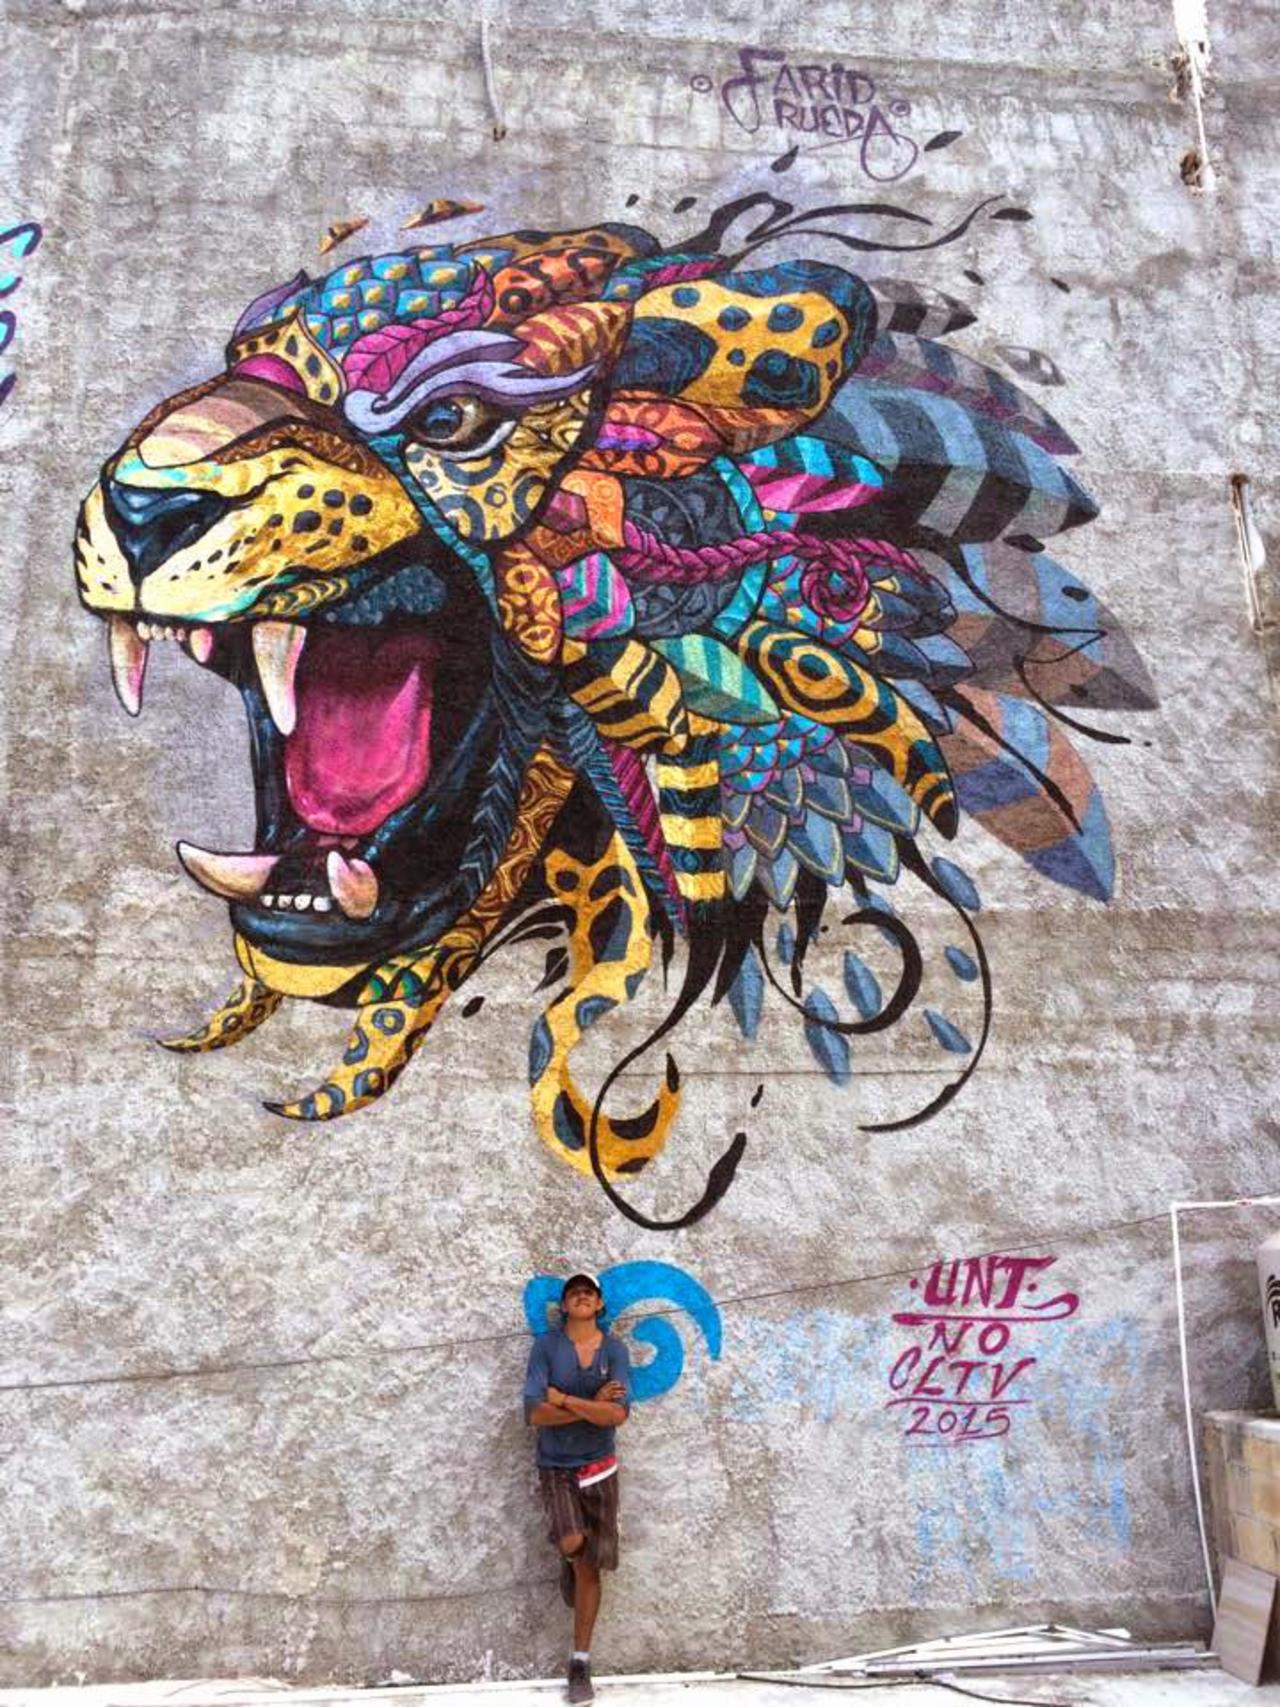 http://www.streetartnews.net/2015/04/farid-rueda-paints-balam-new-piece-in.html?utm_source=feedburner&utm_medium=feed&utm_campaign=Feed:+streetart-news+(Street+Art+News)&m=1 #urbanart #art #streetart http://t.co/wXELjsuqyE